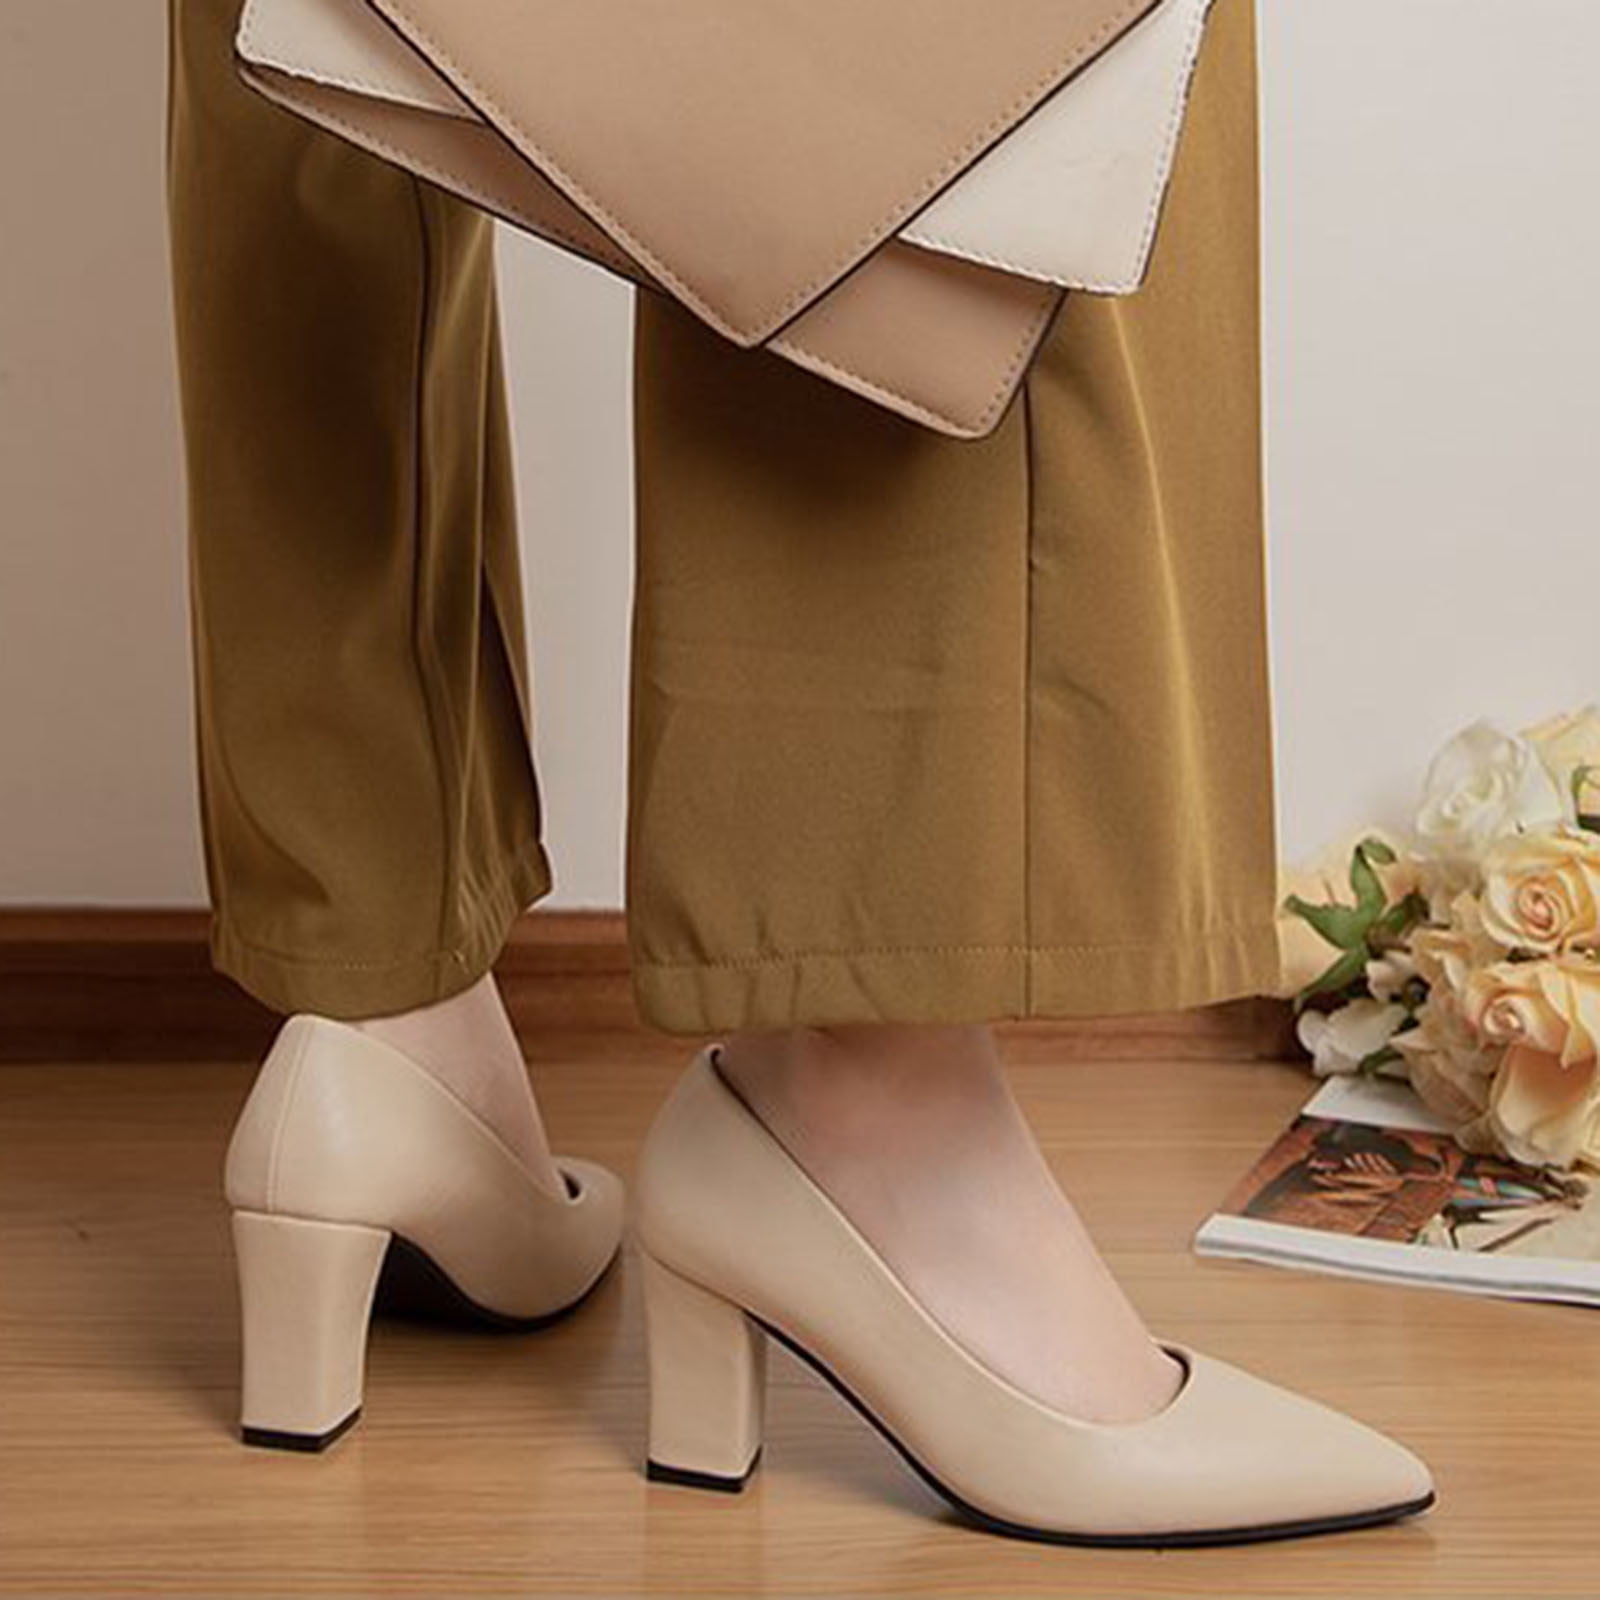 Korean Womens Legs High-heeled Shoes Stock Photo 716395192 | Shutterstock